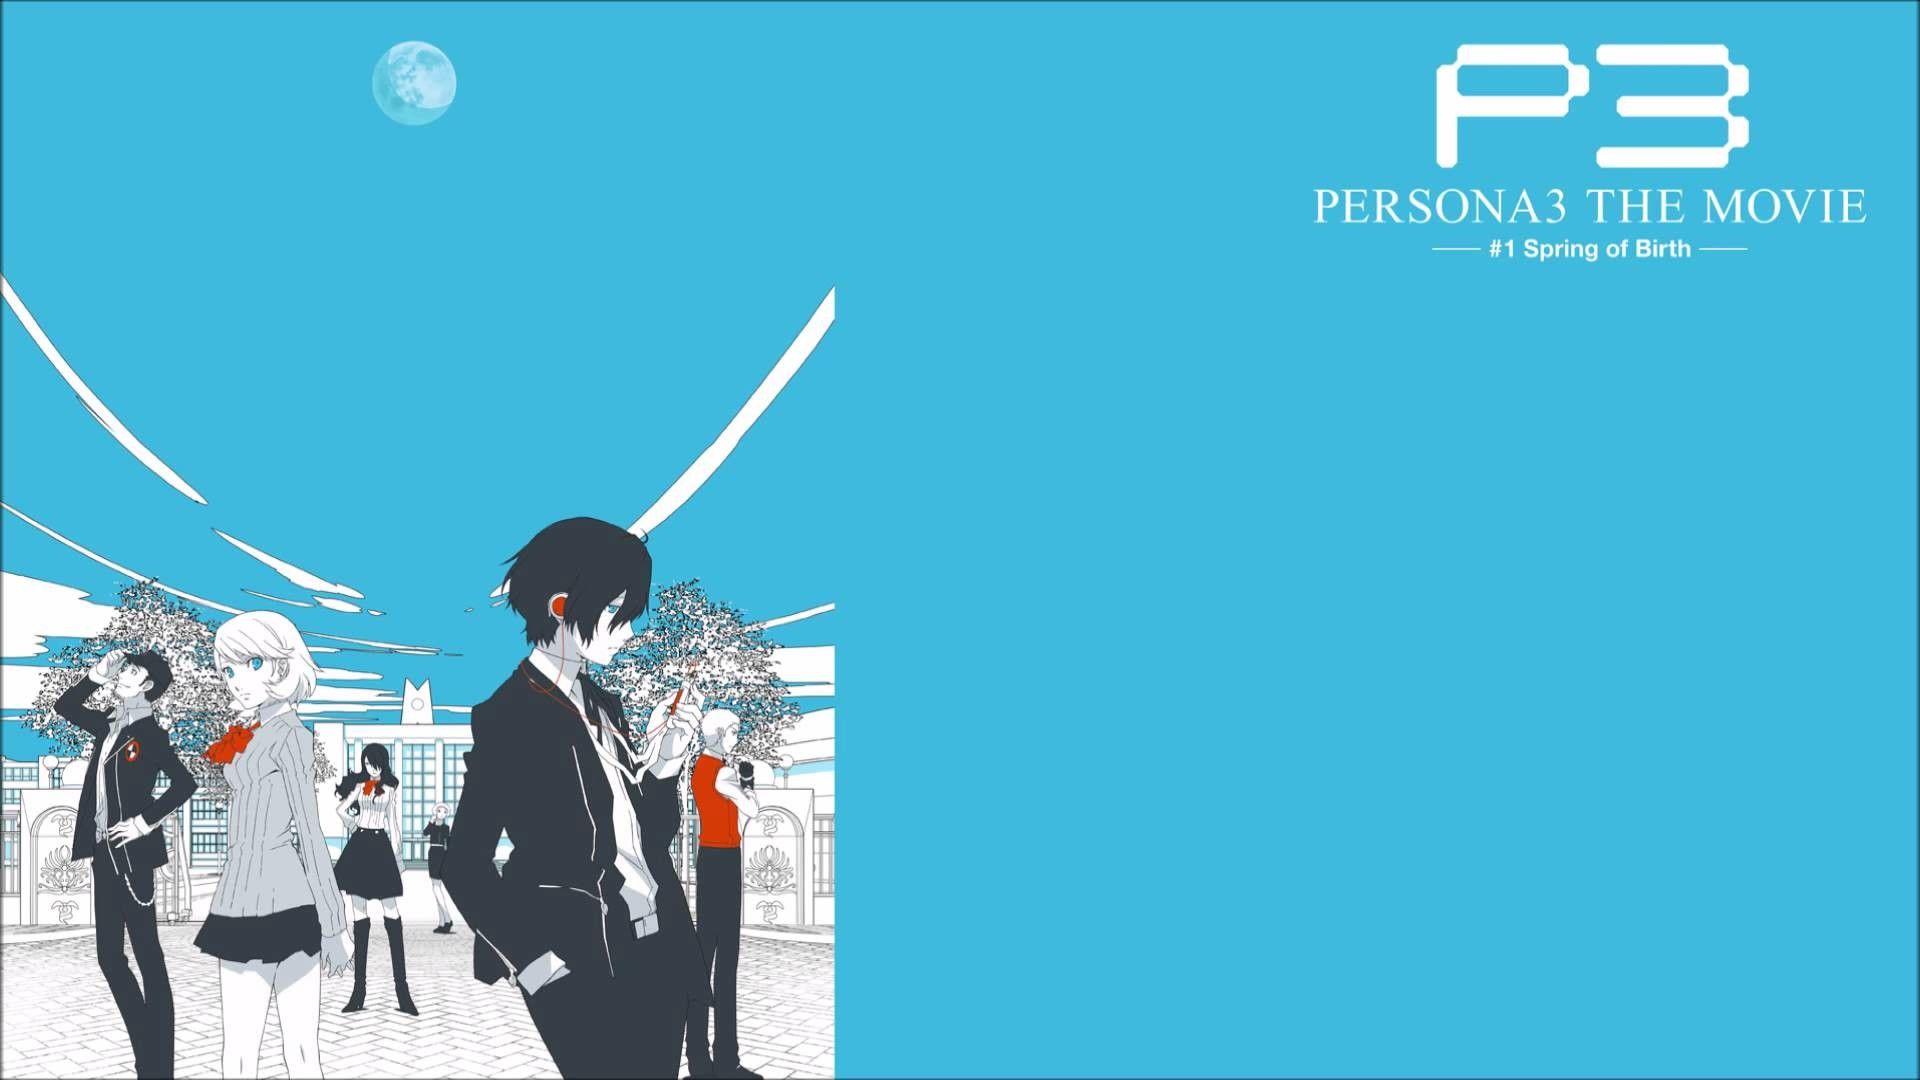 Persona 3 Background